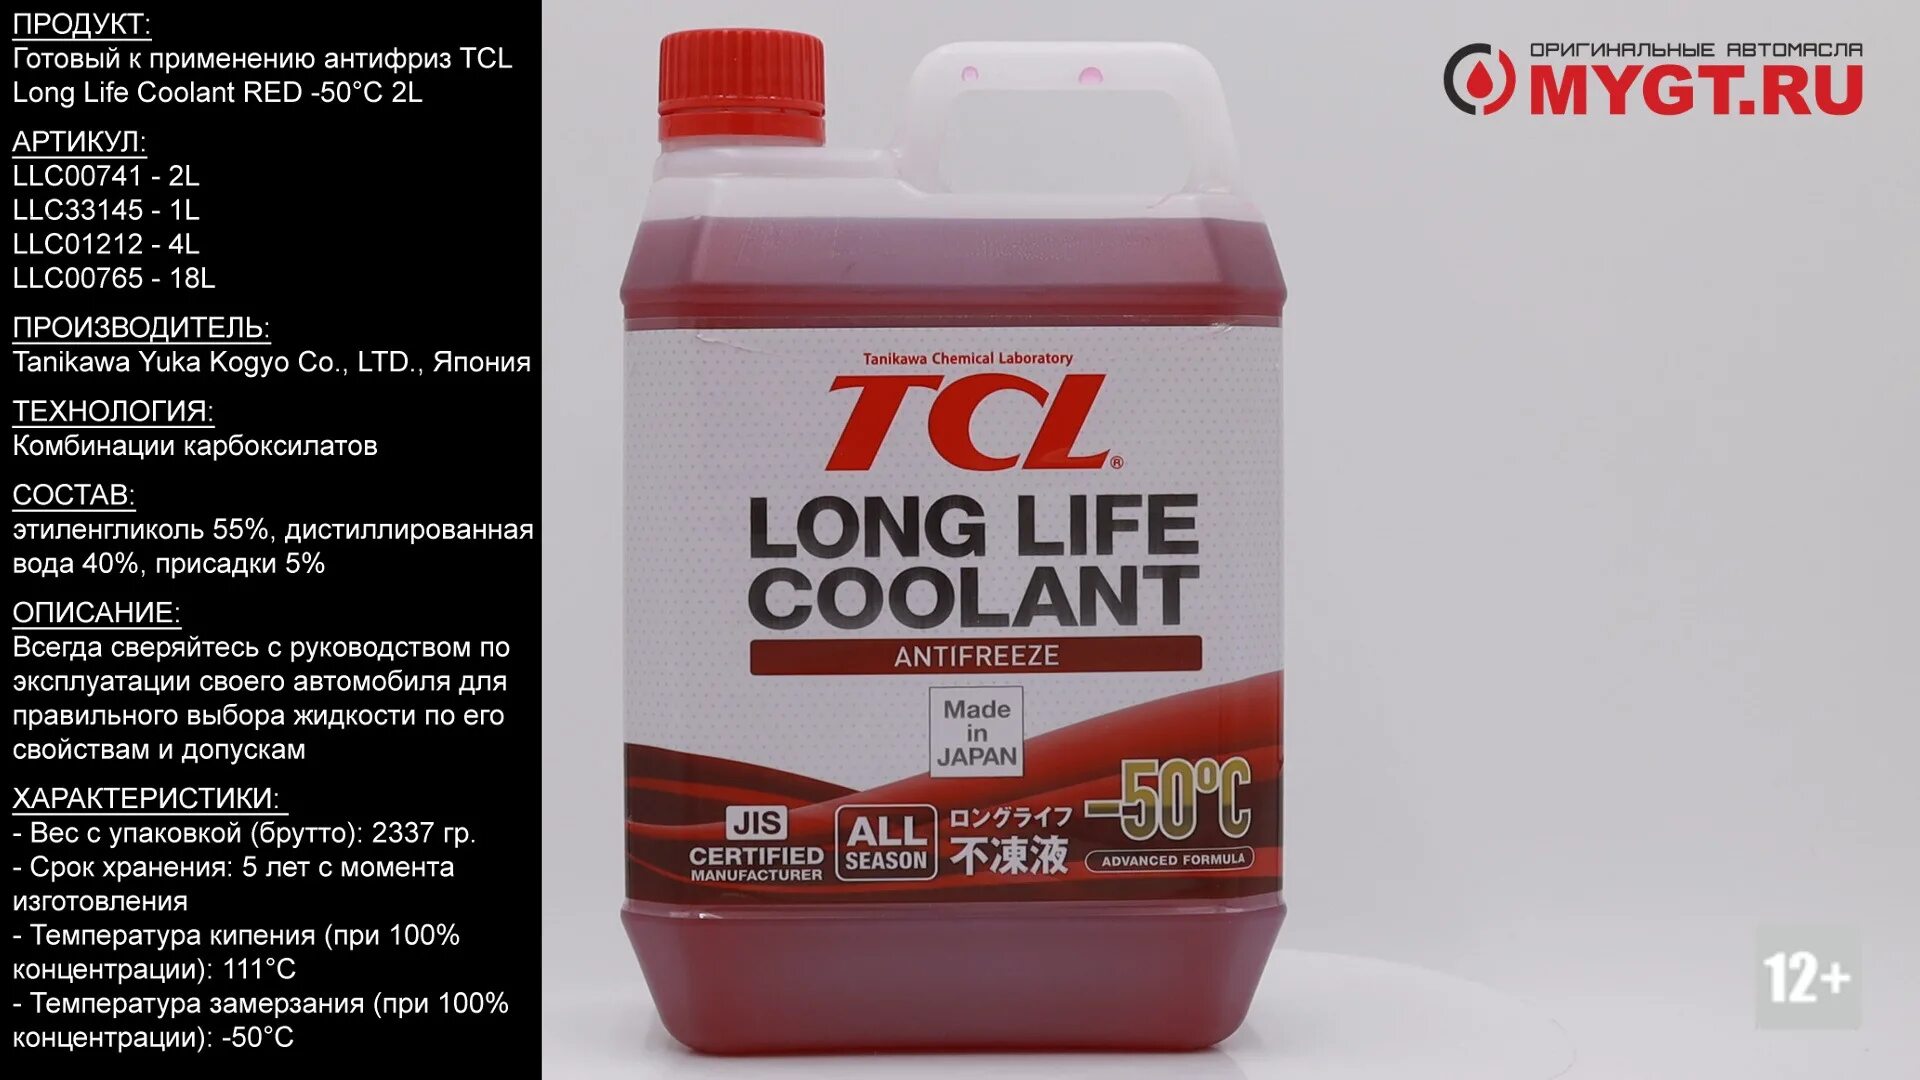 Tcl long life. TCL LLC антифриз -40 Red 2l. Антифриз TCL LLC (long Life Coolant) -50. Антифриз TCL LLC Red -50. Антифриз TCL красный -50.